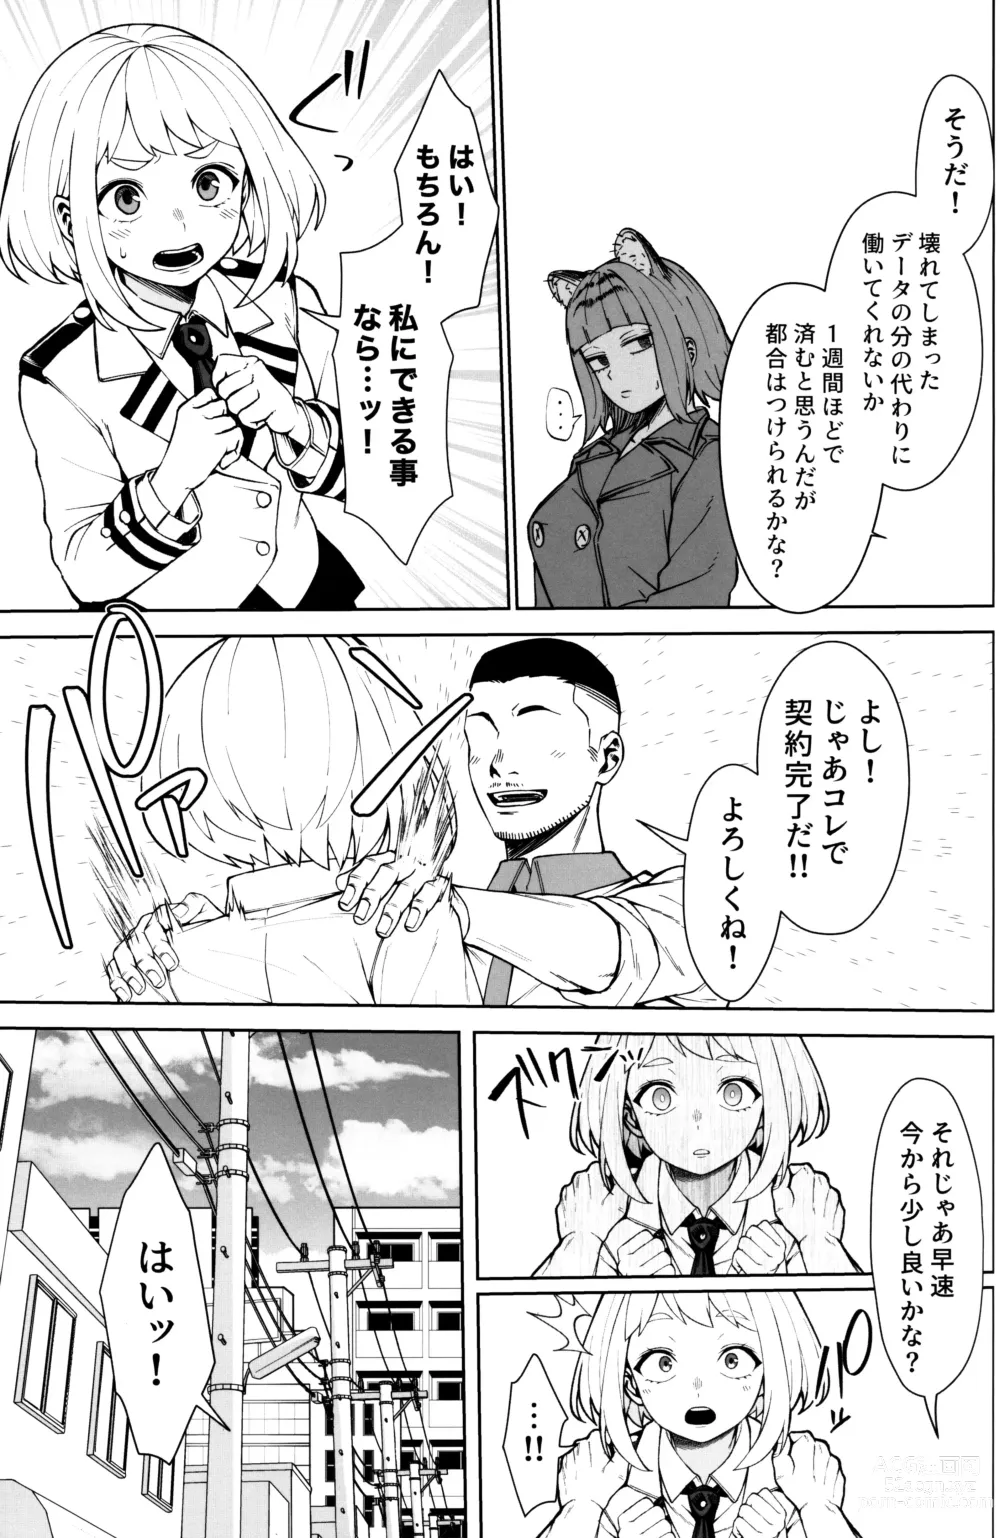 Page 4 of doujinshi Pathetic Heroism